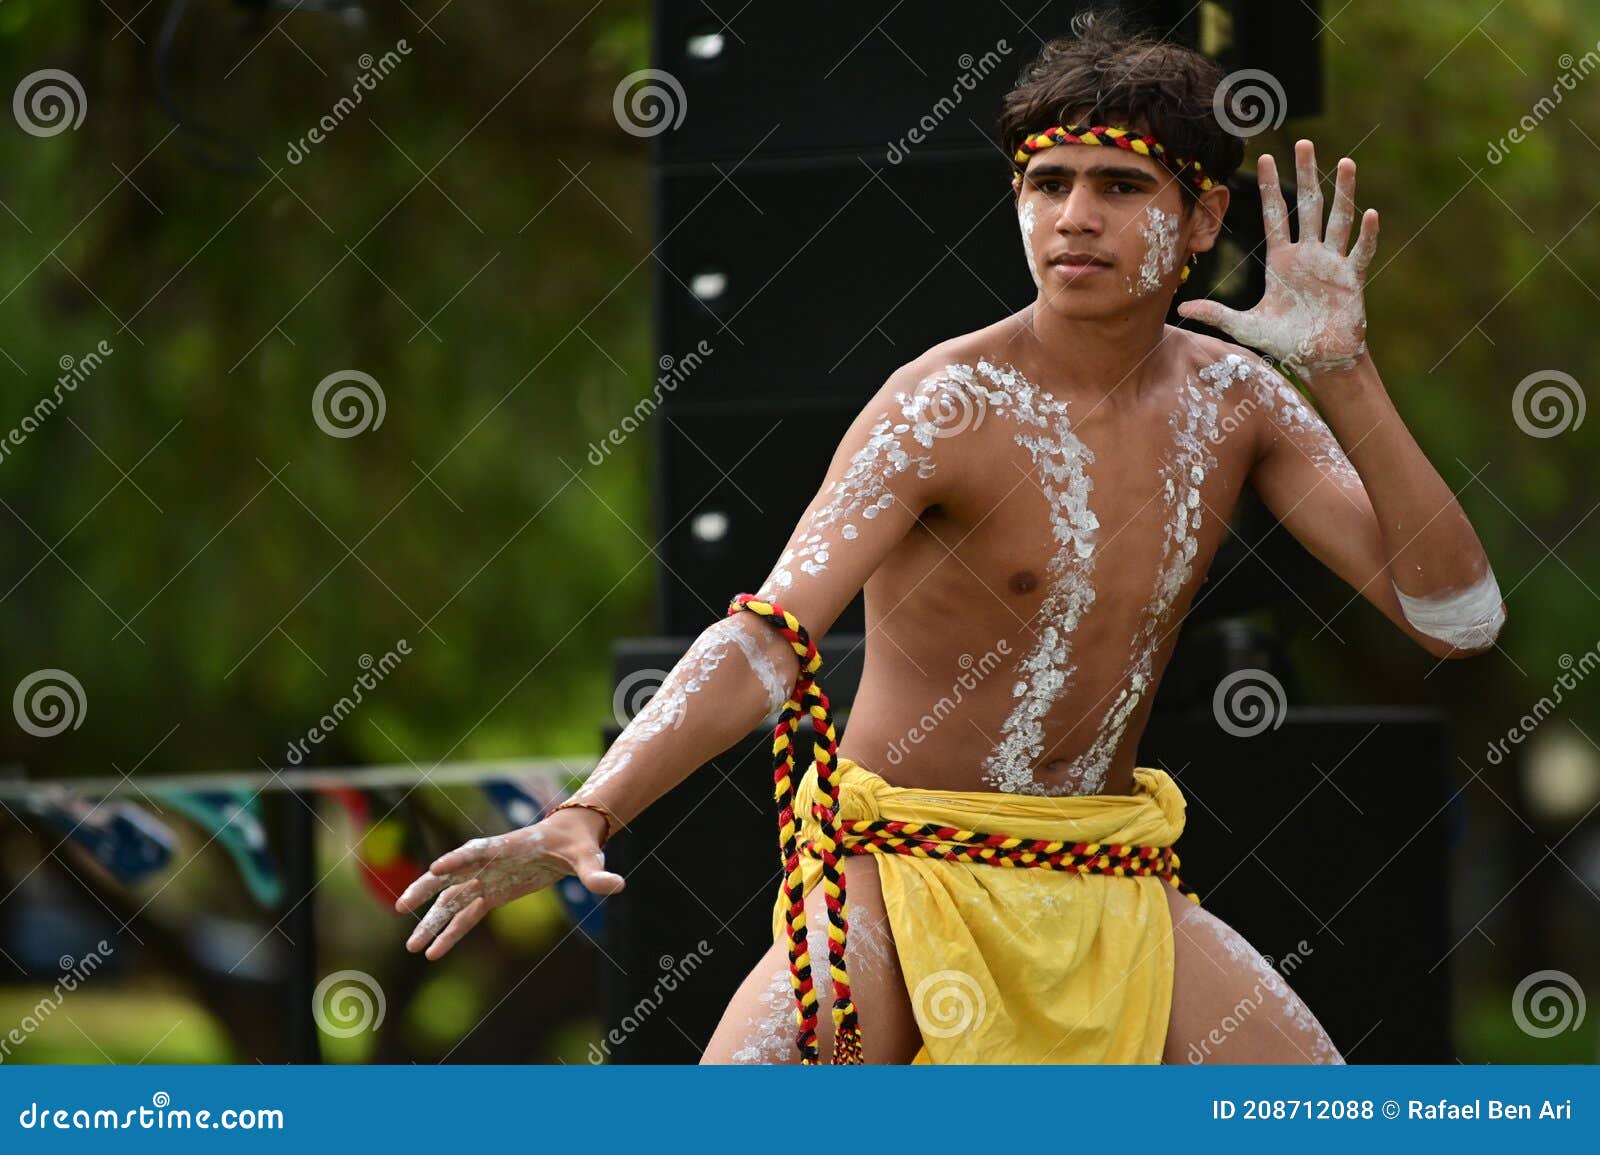 Aboriginal Australians Man Dancing Traditional Dance During Australia Day Celebrations Editorial